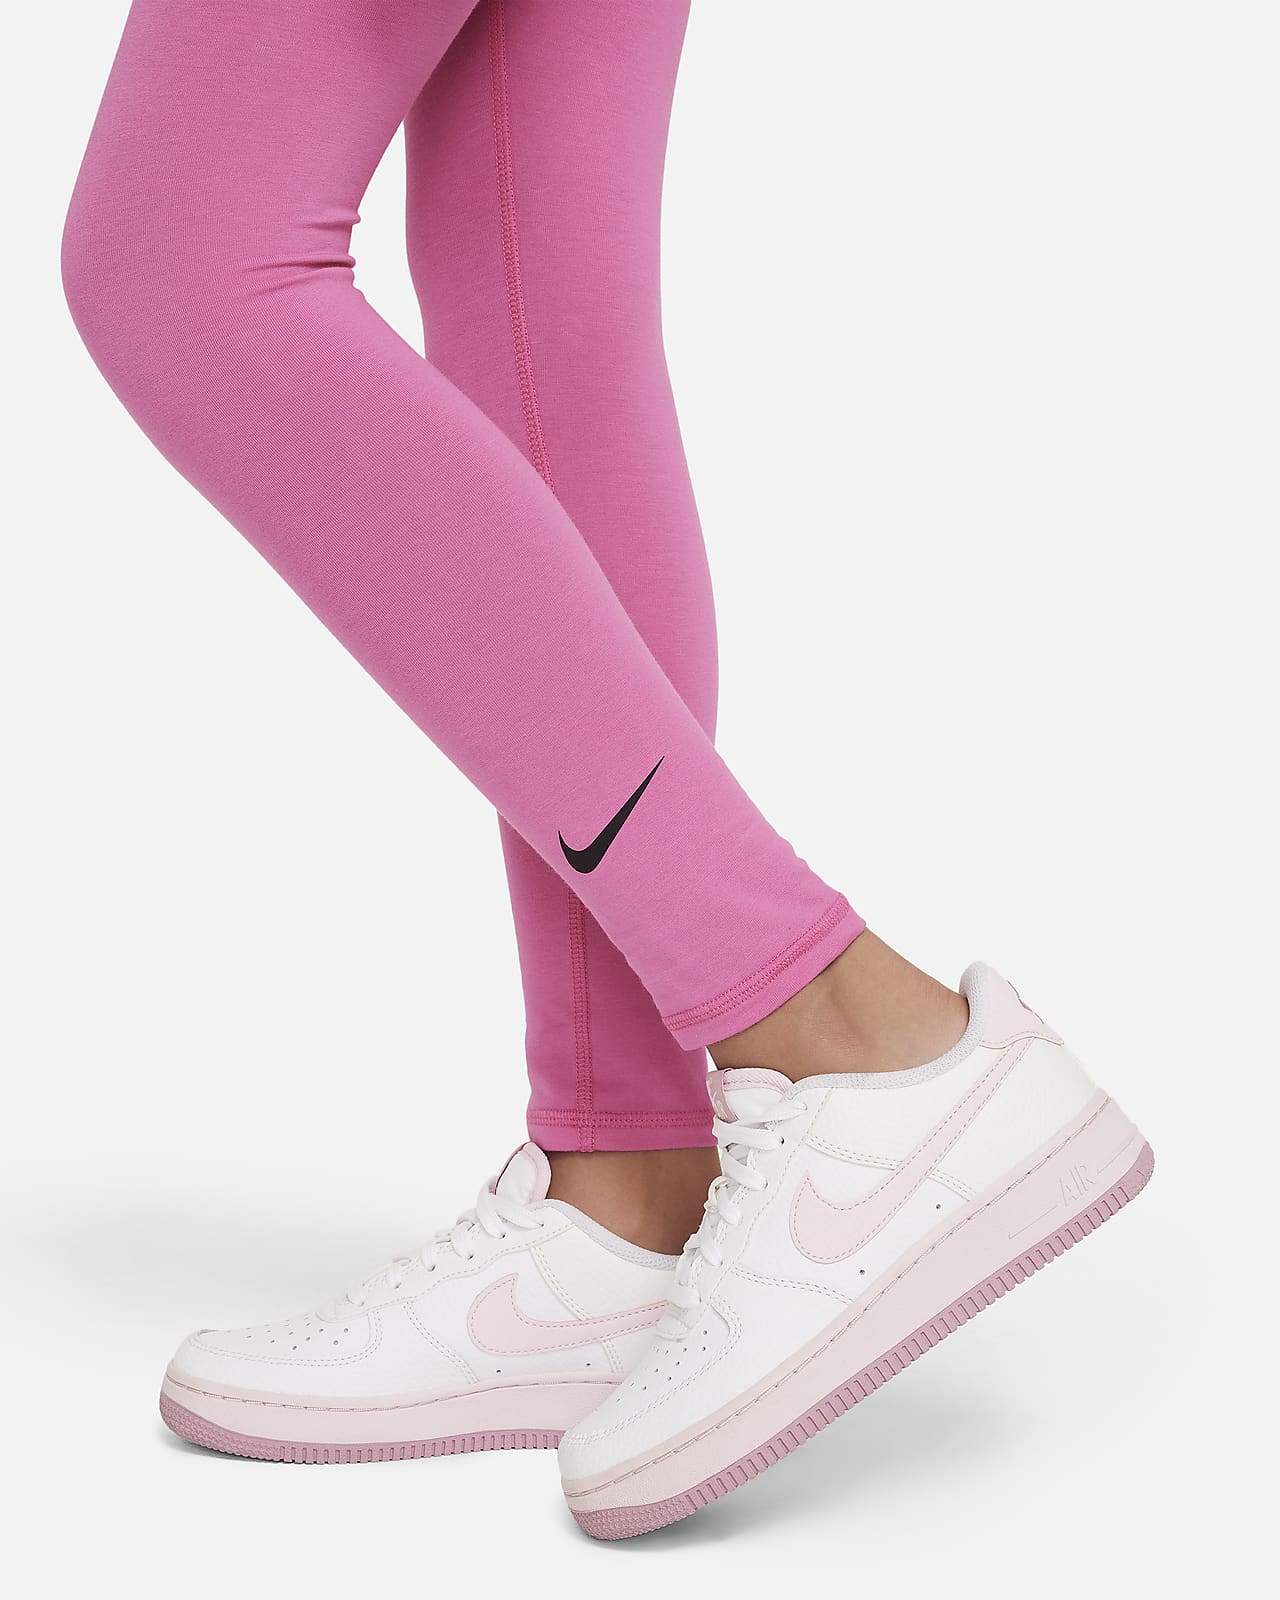 Leggings a vita alta Nike Sportswear Favorites – Ragazza